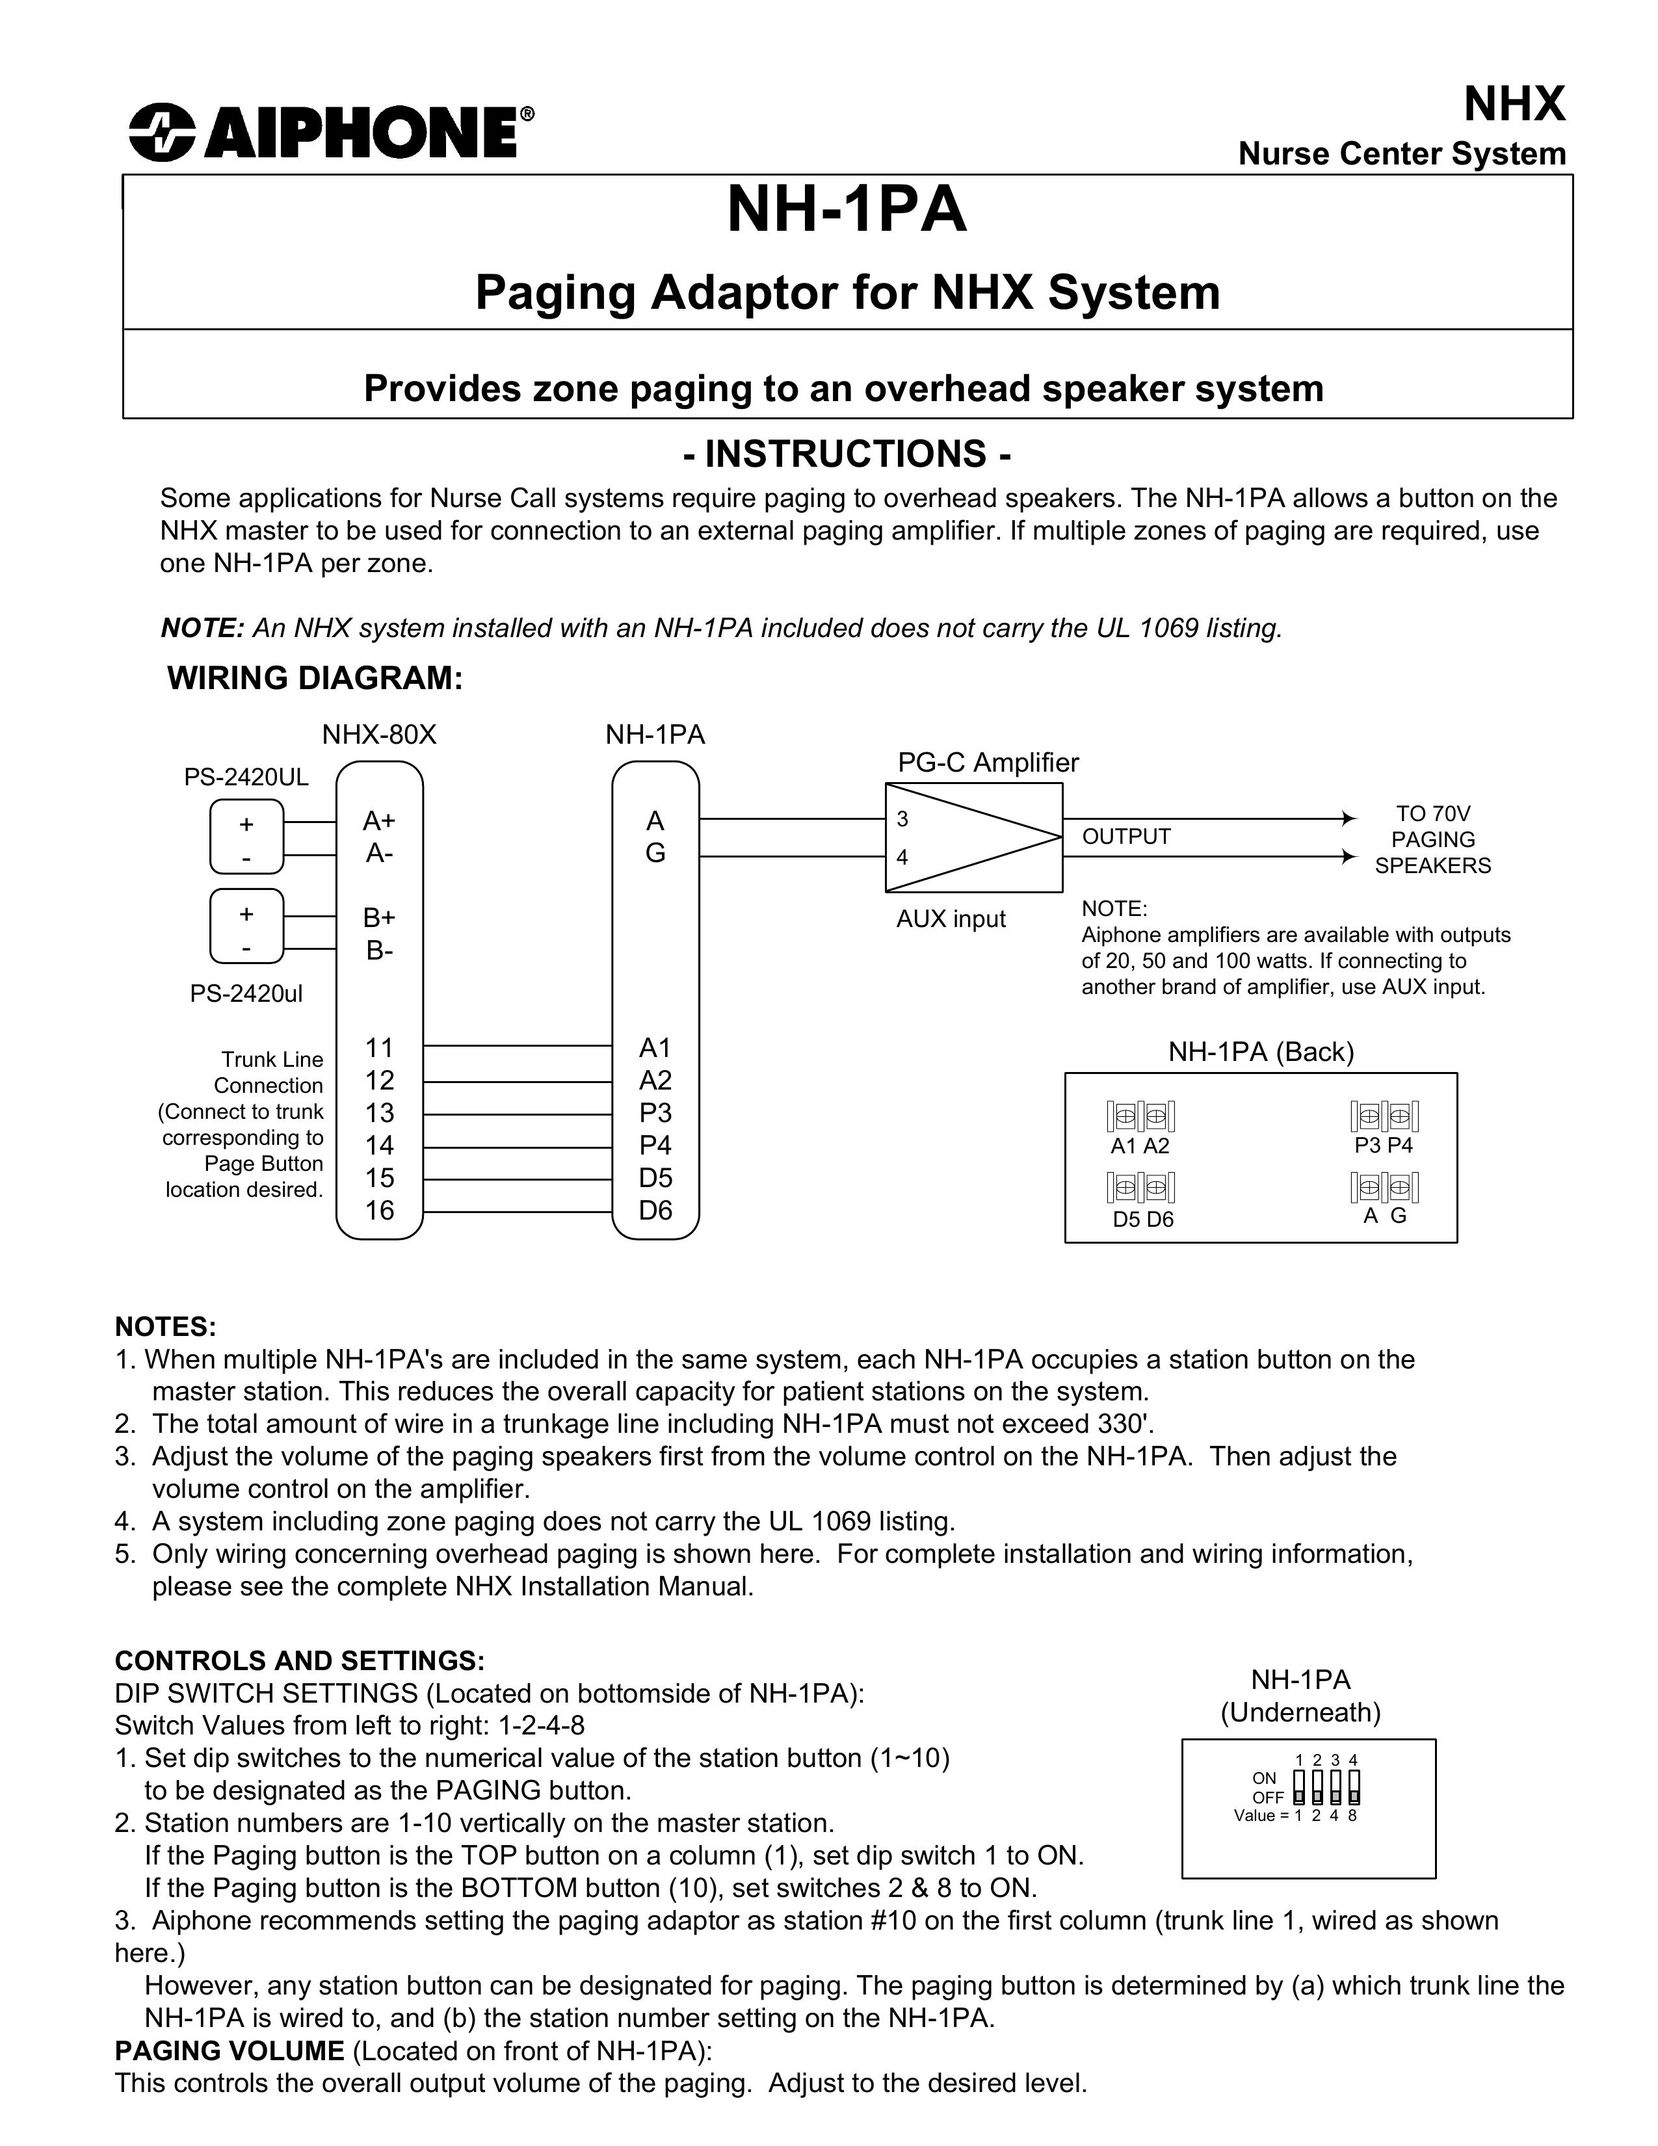 Aiphone NH-1PA Network Card User Manual